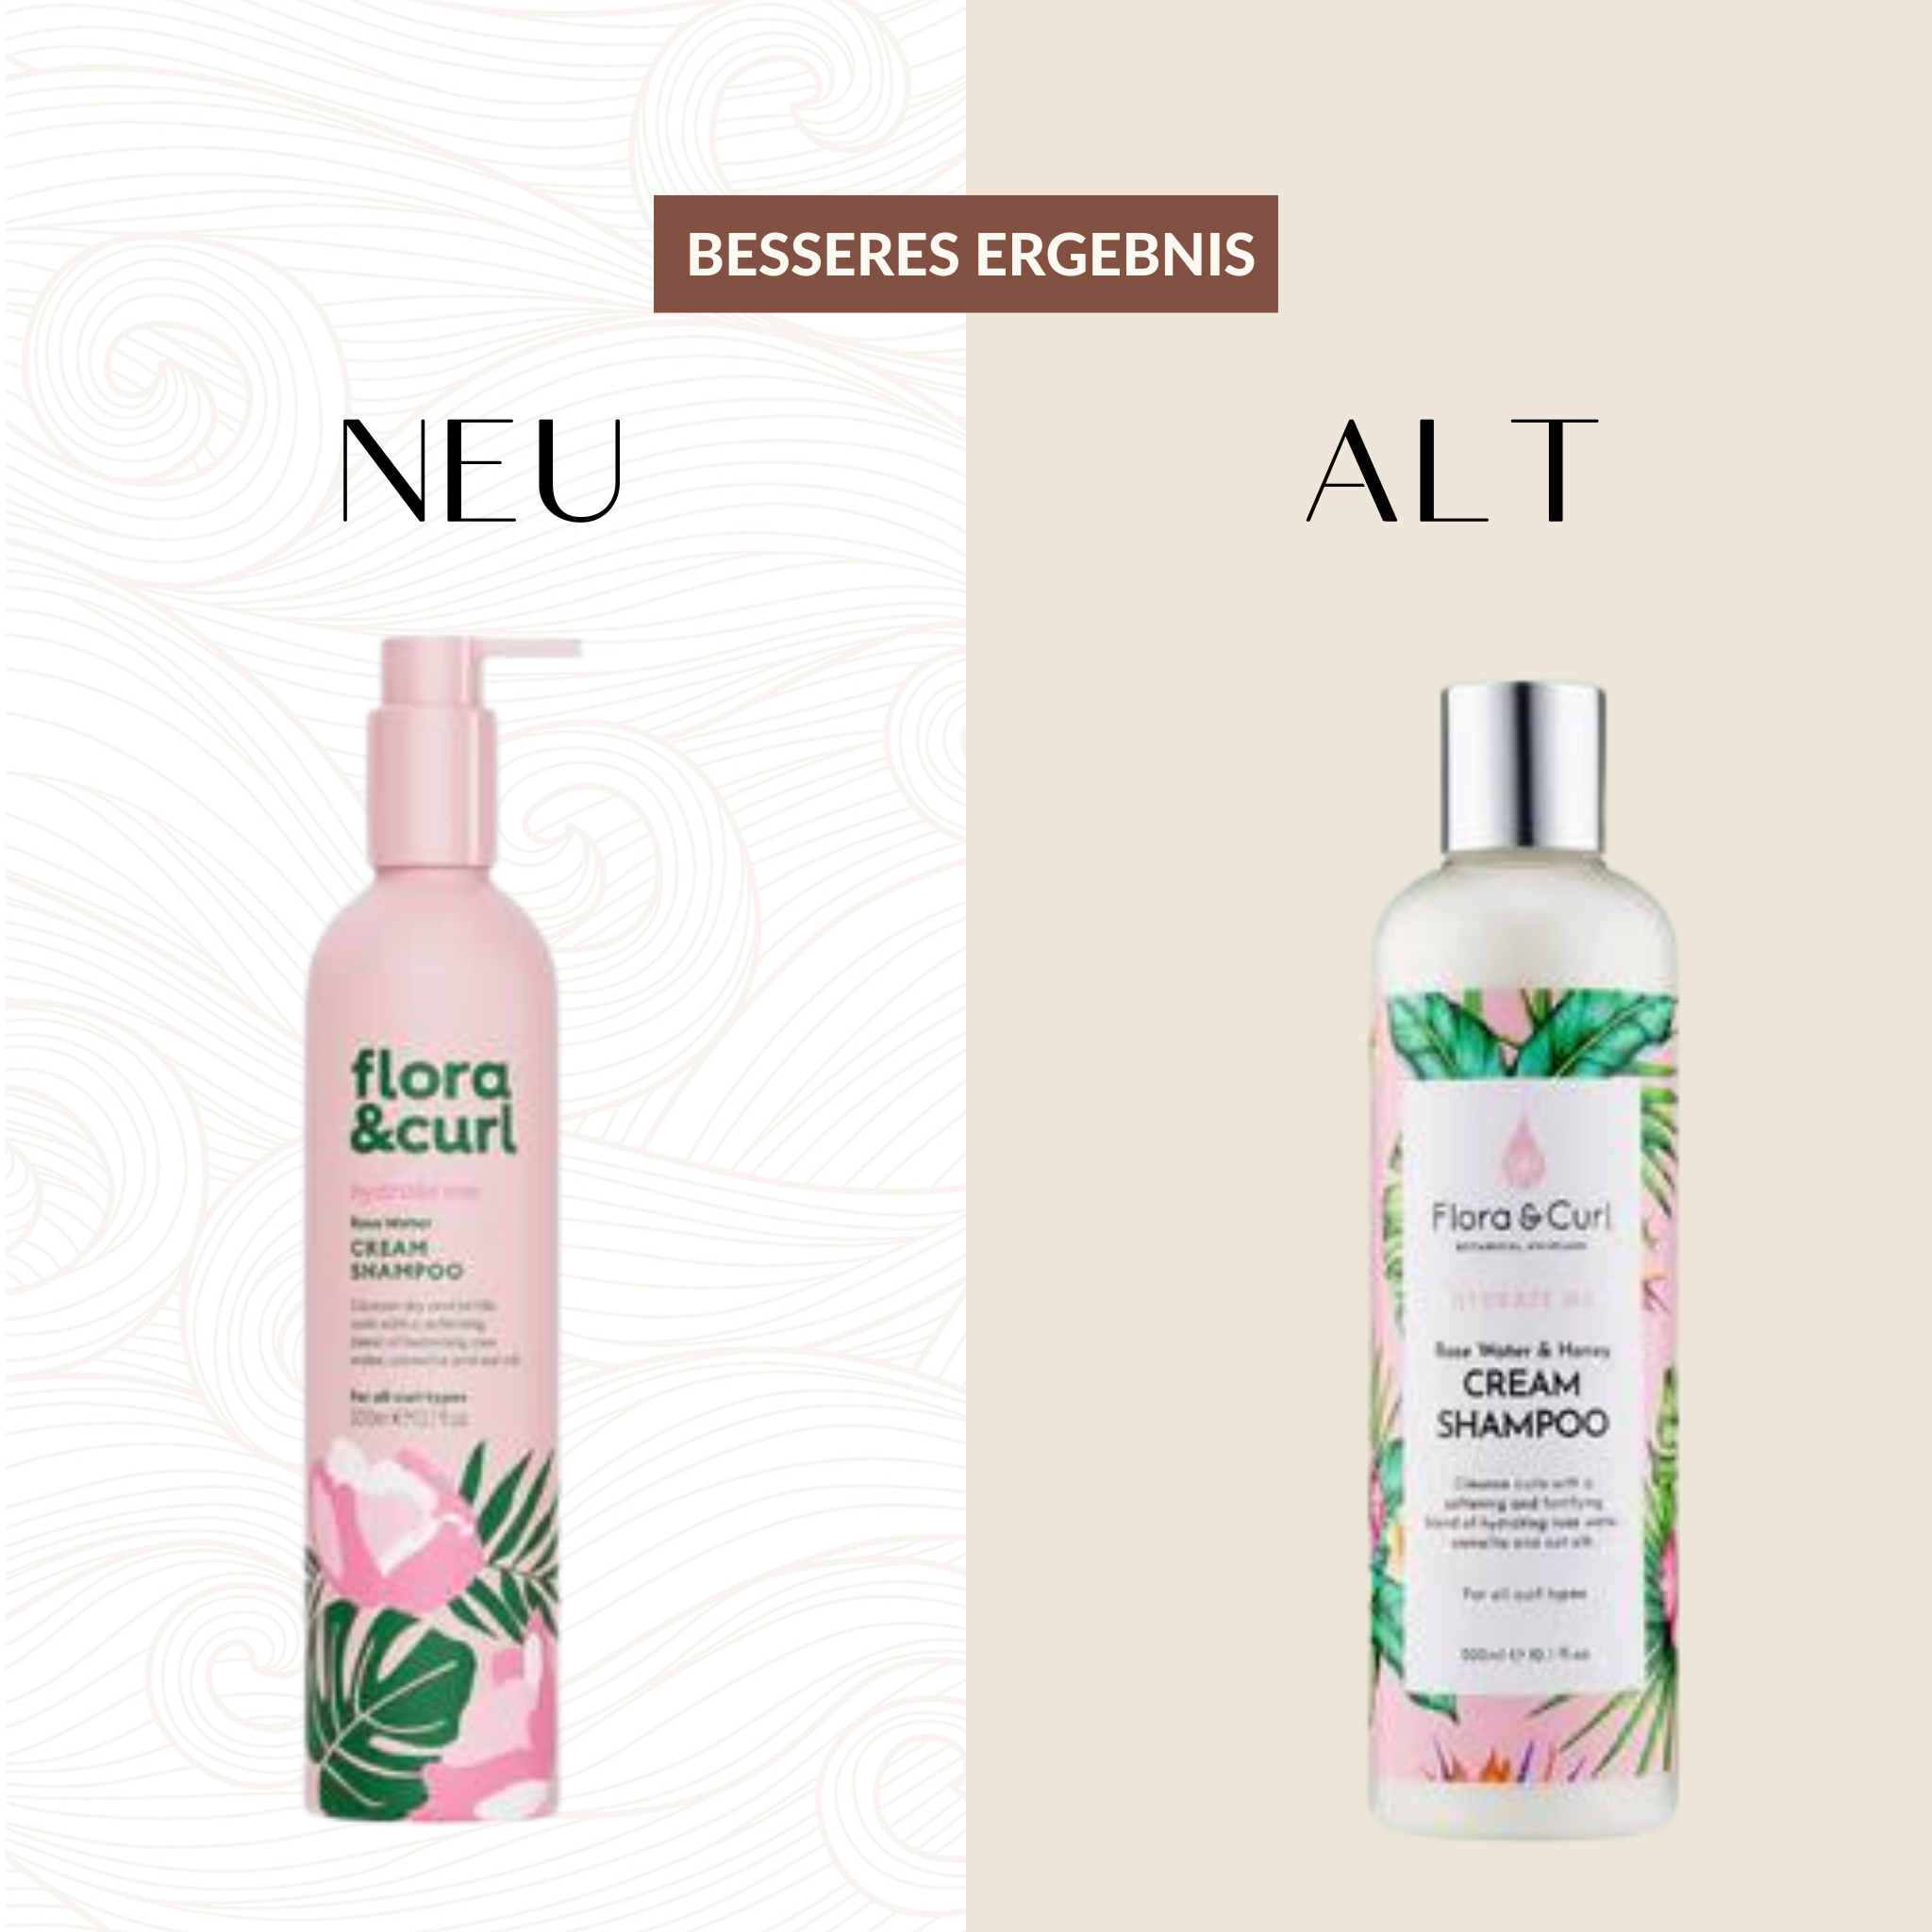 Flora & Curl | Rose Water Cream Shampoo /ab 300ml Shampoo Flora & Curl